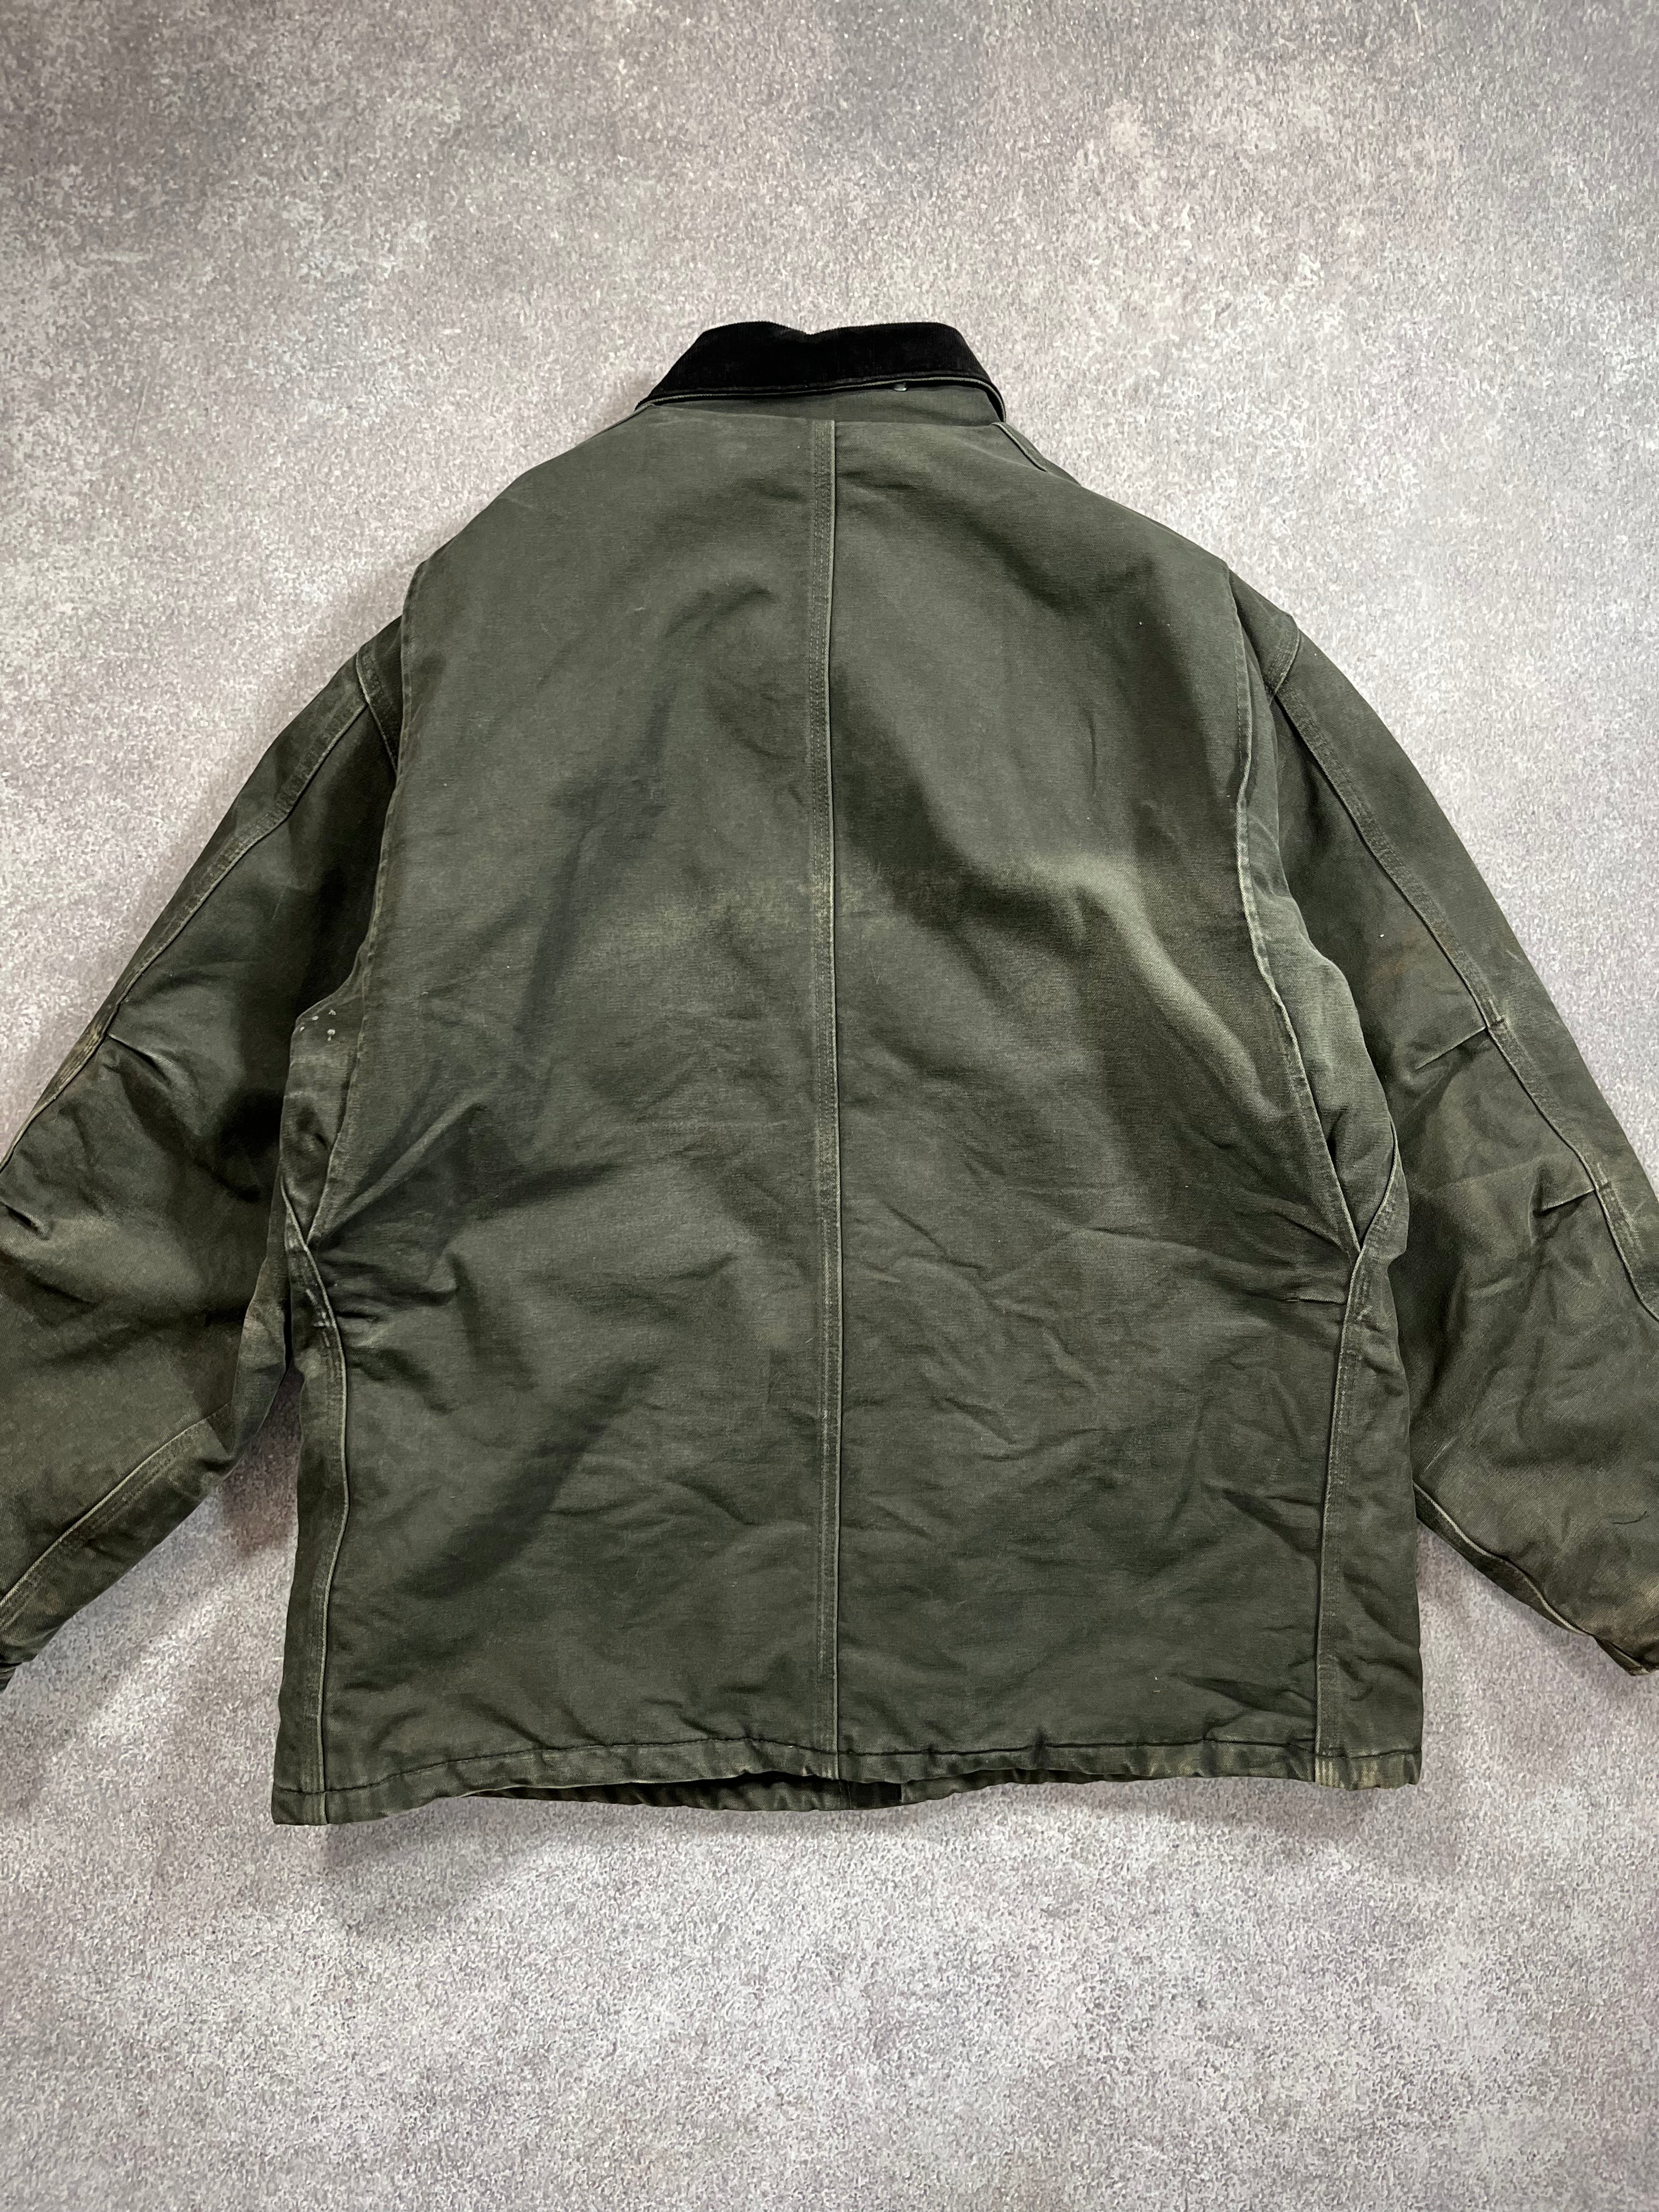 Carhartt Chore Coat Jacket Green // X-Large - RHAGHOUSE VINTAGE